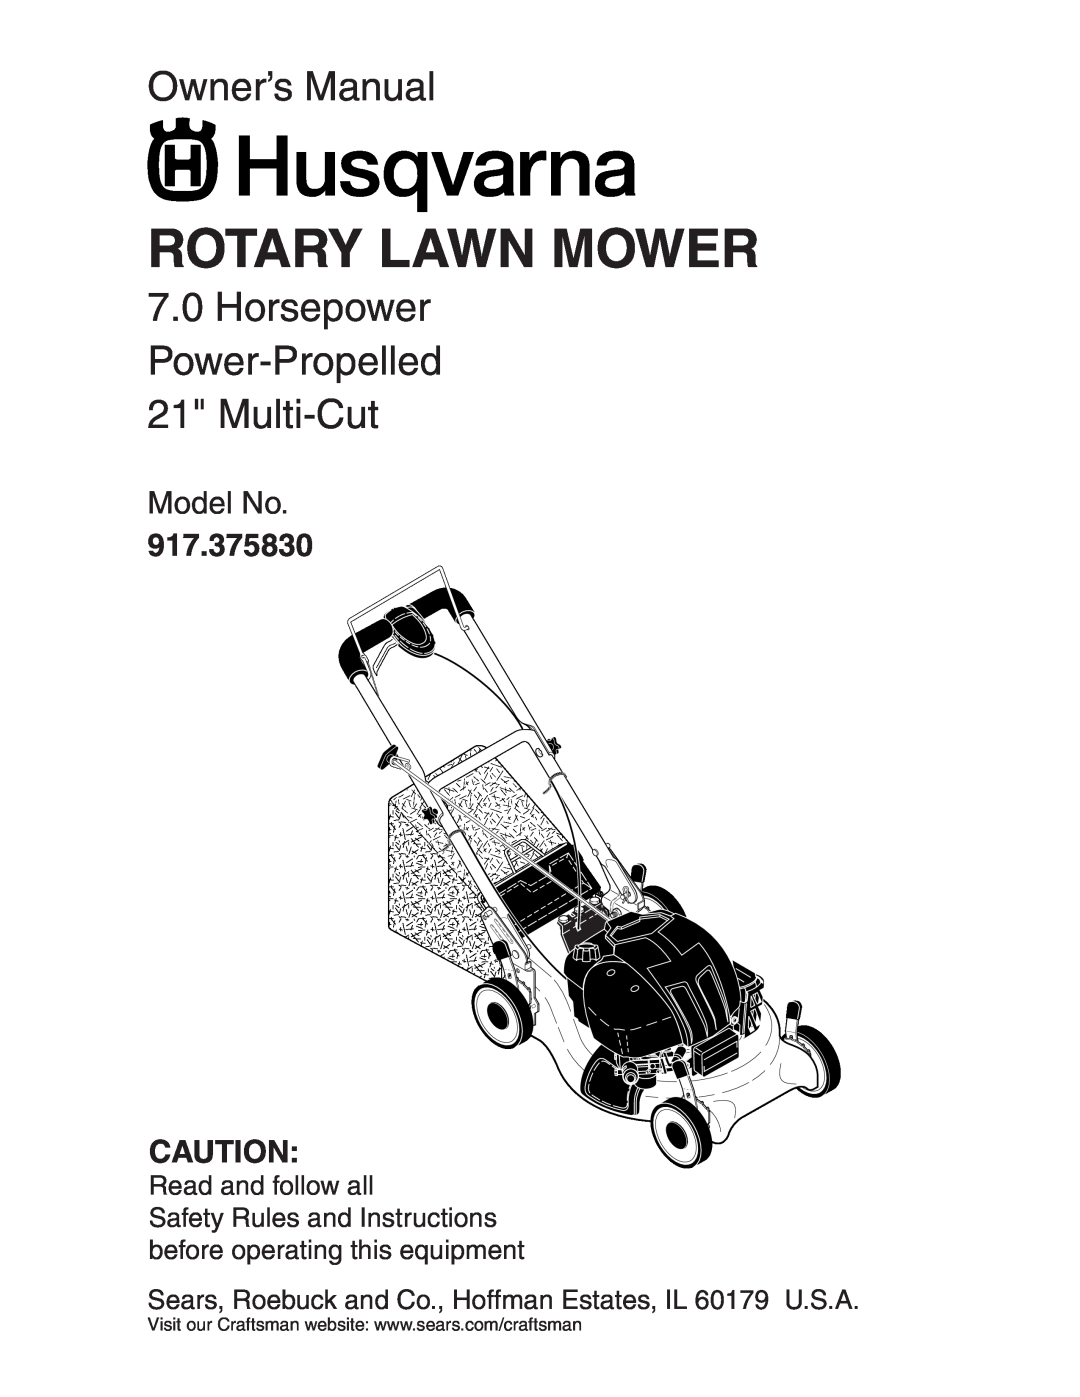 Husqvarna owner manual 917.375830, Rotary Lawn Mower, Owner’s Manual, Horsepower Power-Propelled 21 Multi-Cut, Model No 